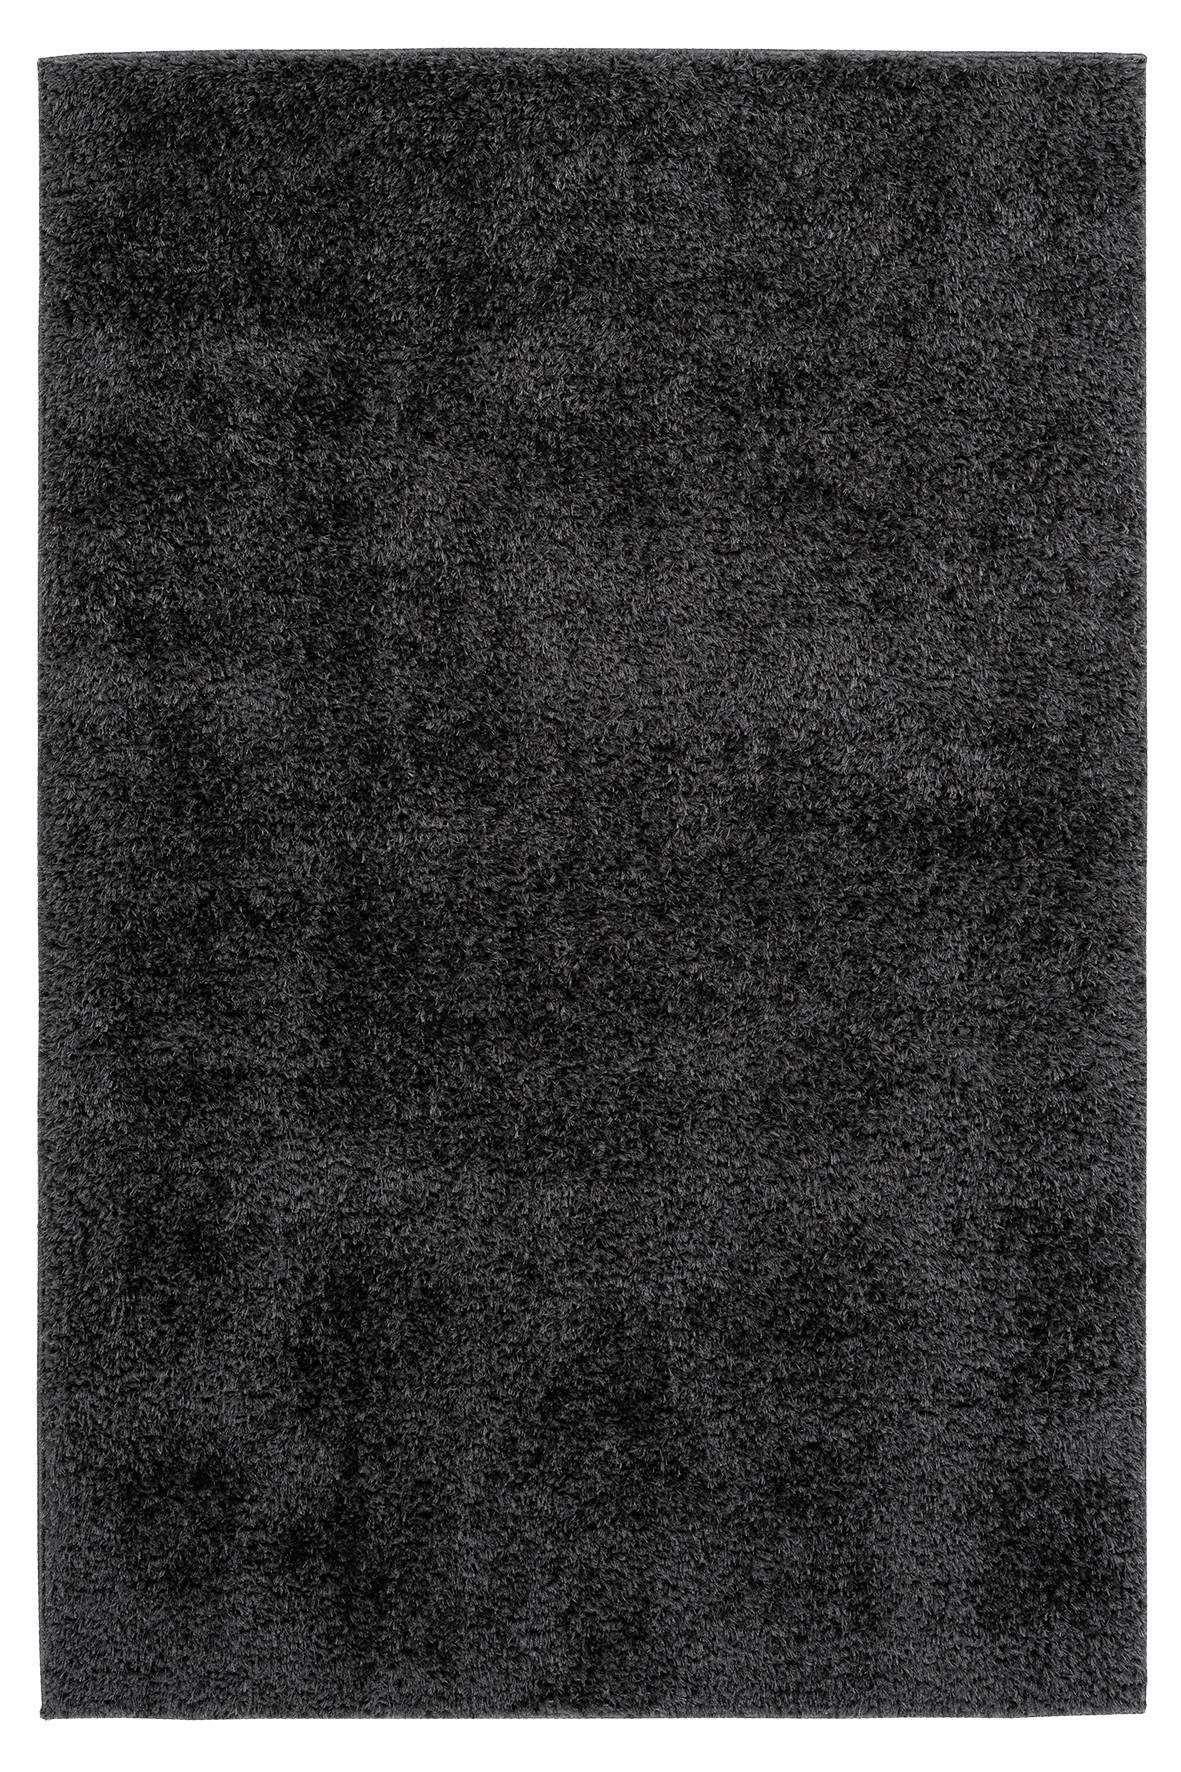 HOCHFLORTEPPICH 60/110 cm  - Graphitfarben, Basics, Textil (60/110cm) - Novel